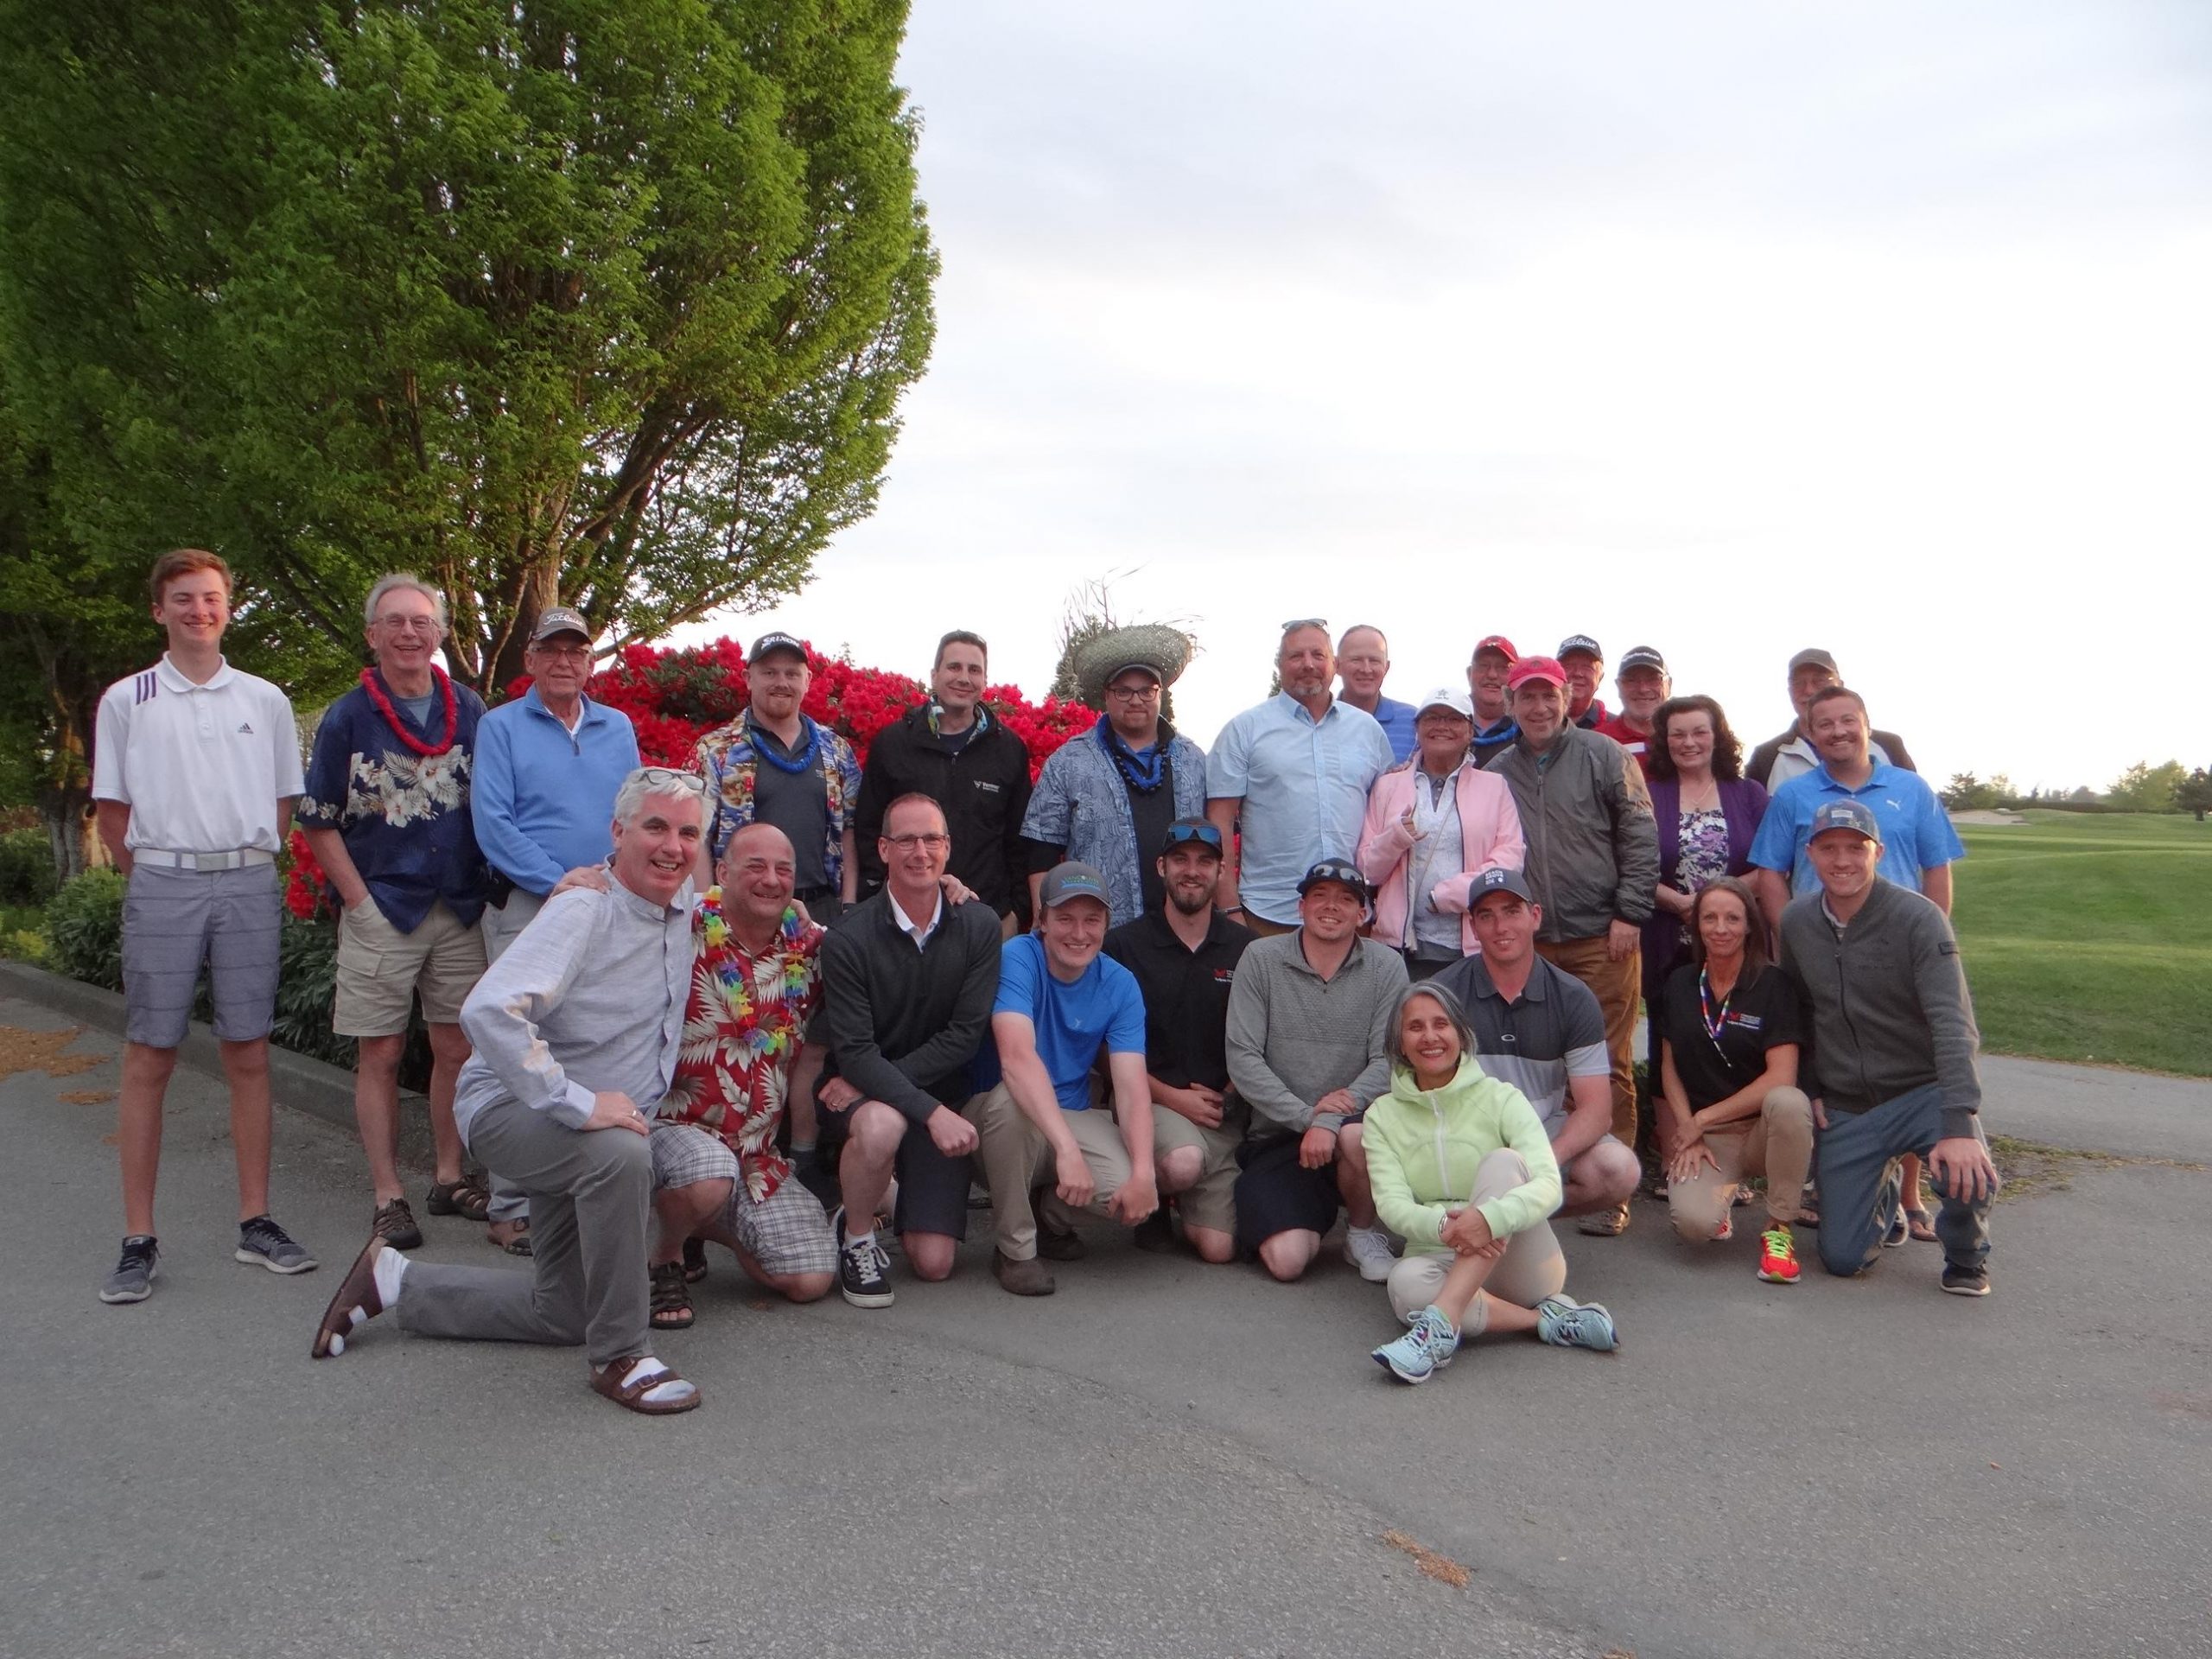 2021 Pat Dooley Memorial Golf Tournament and Turf Mangement Field Day